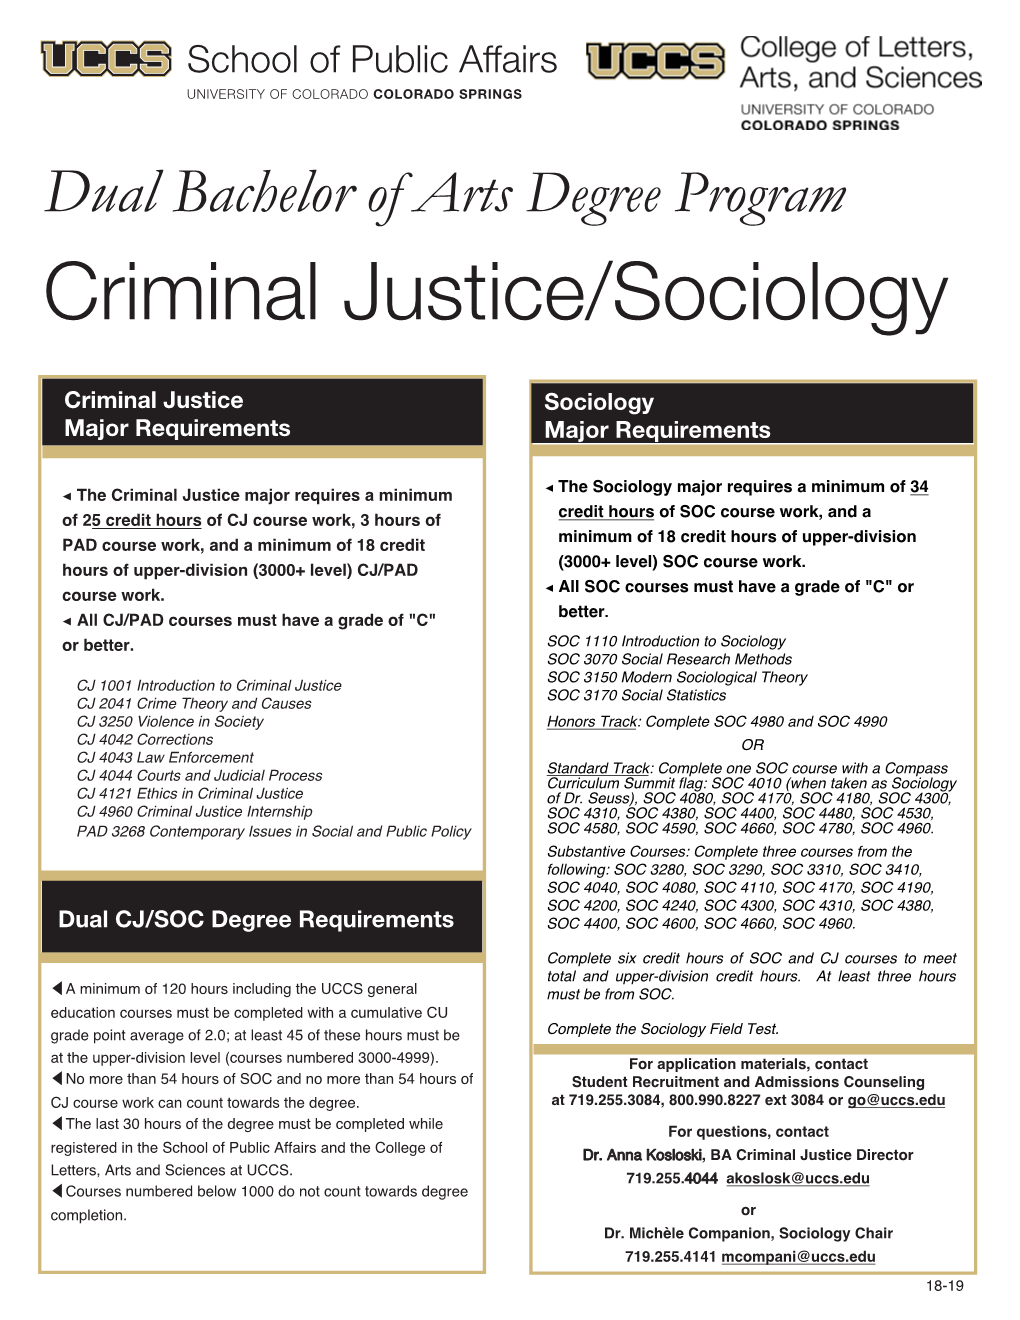 Criminal Justice/Sociology